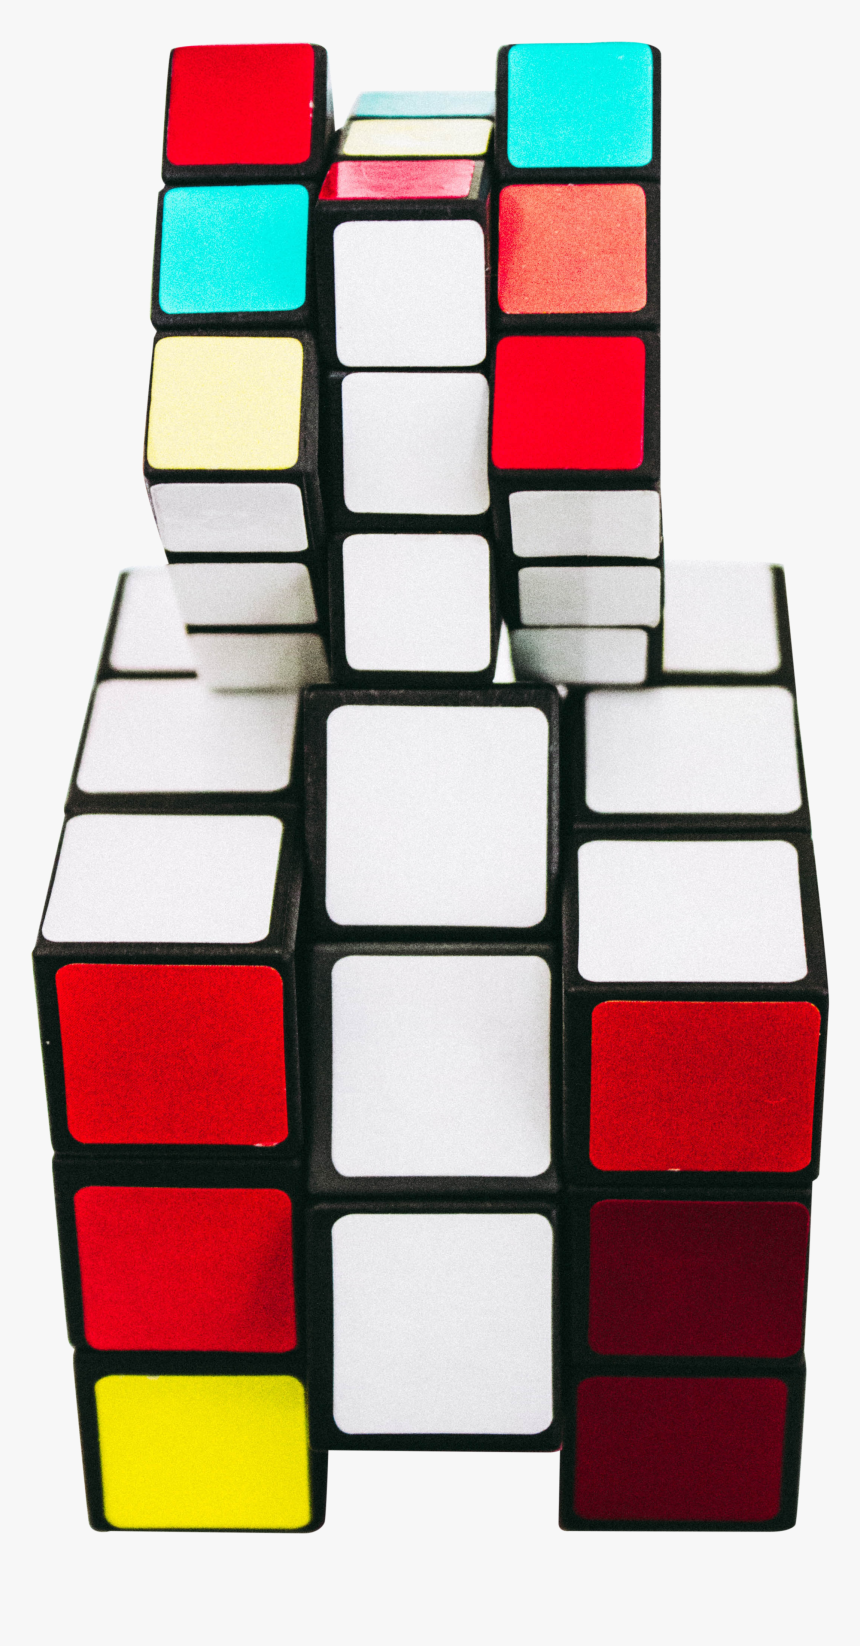 3 X 3 Rubiks Cube - Rubik's Cube, HD Png Download, Free Download